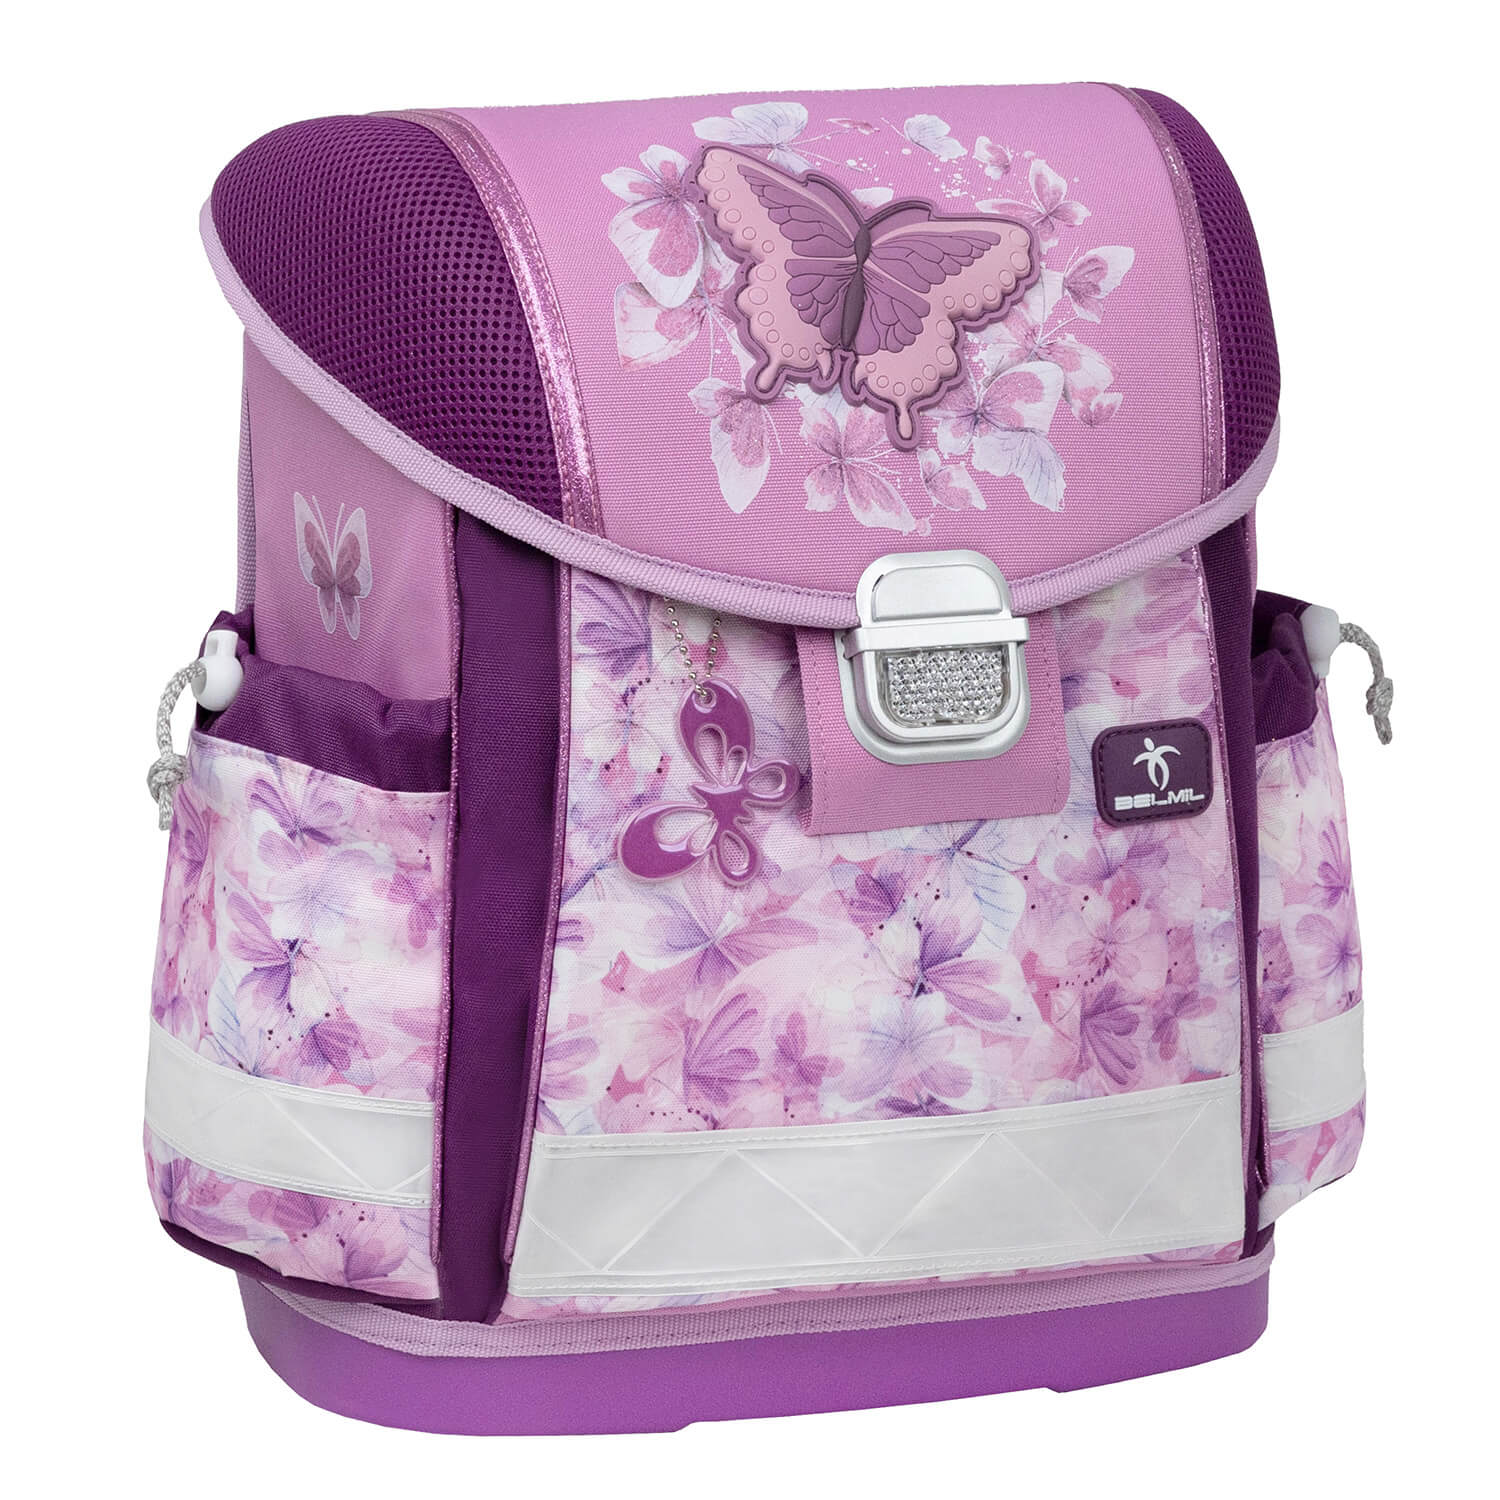 Classy Chic Charms schoolbag set 4 pcs